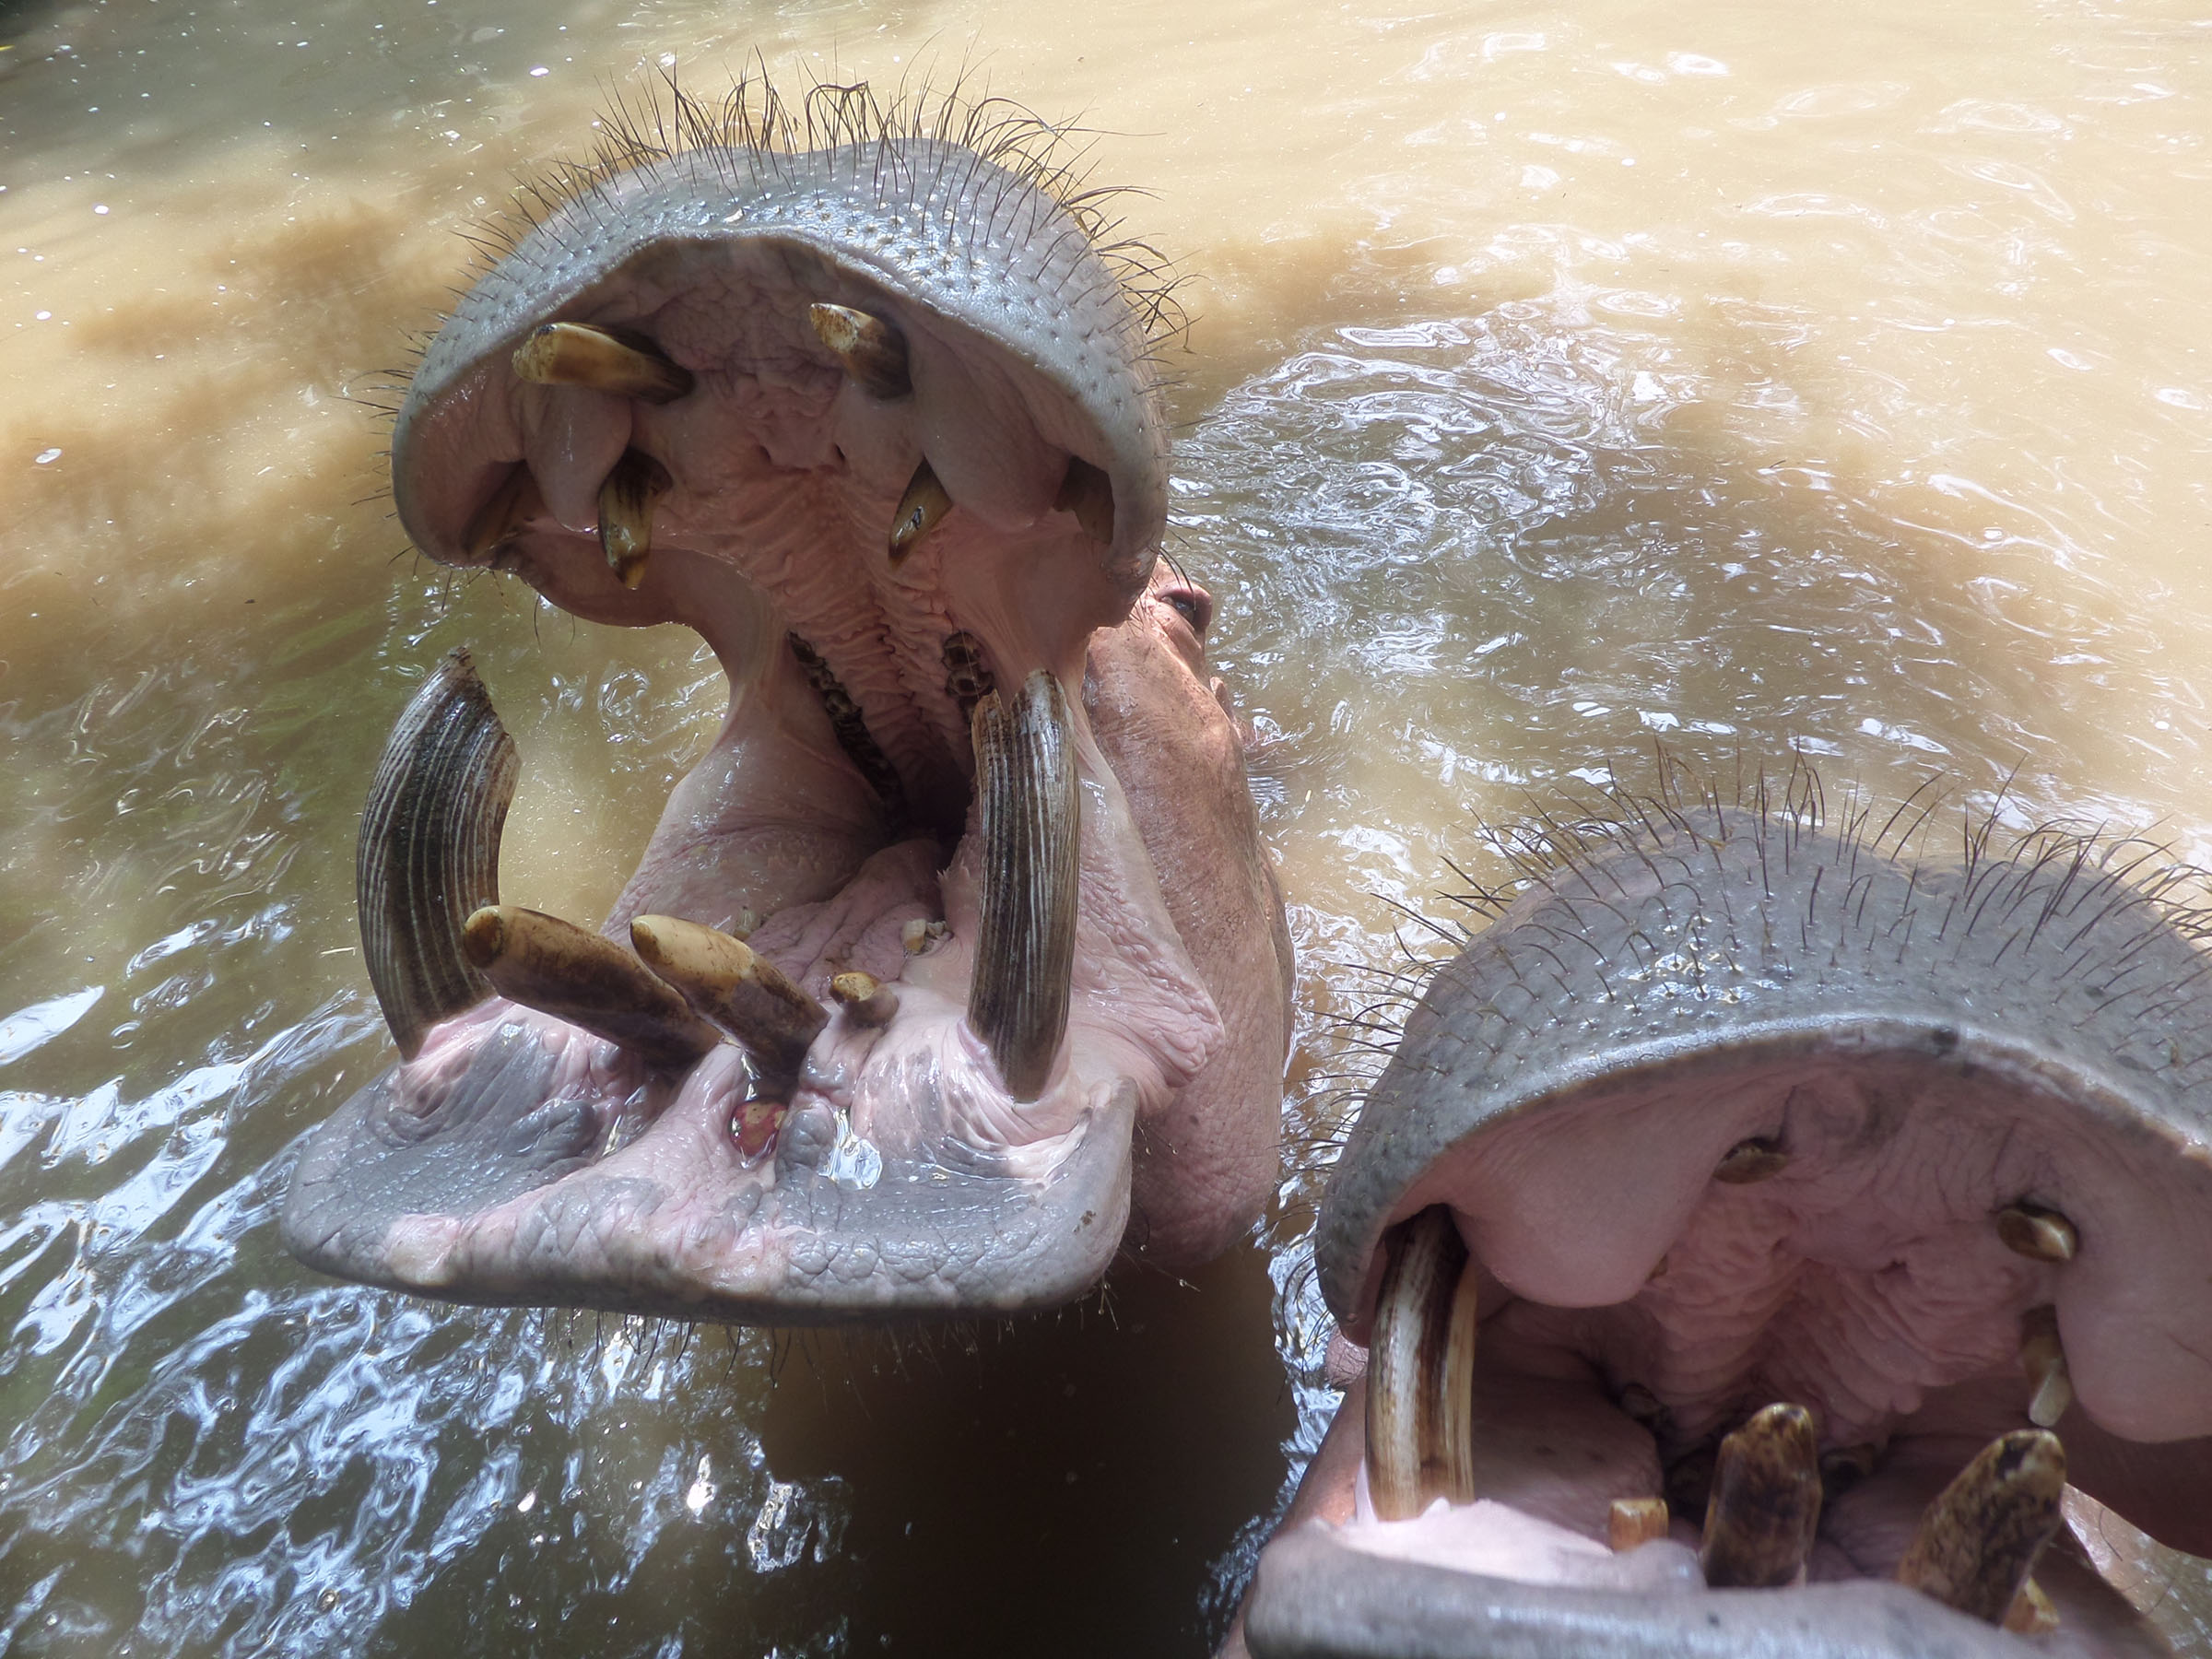 Hippo mouth photo